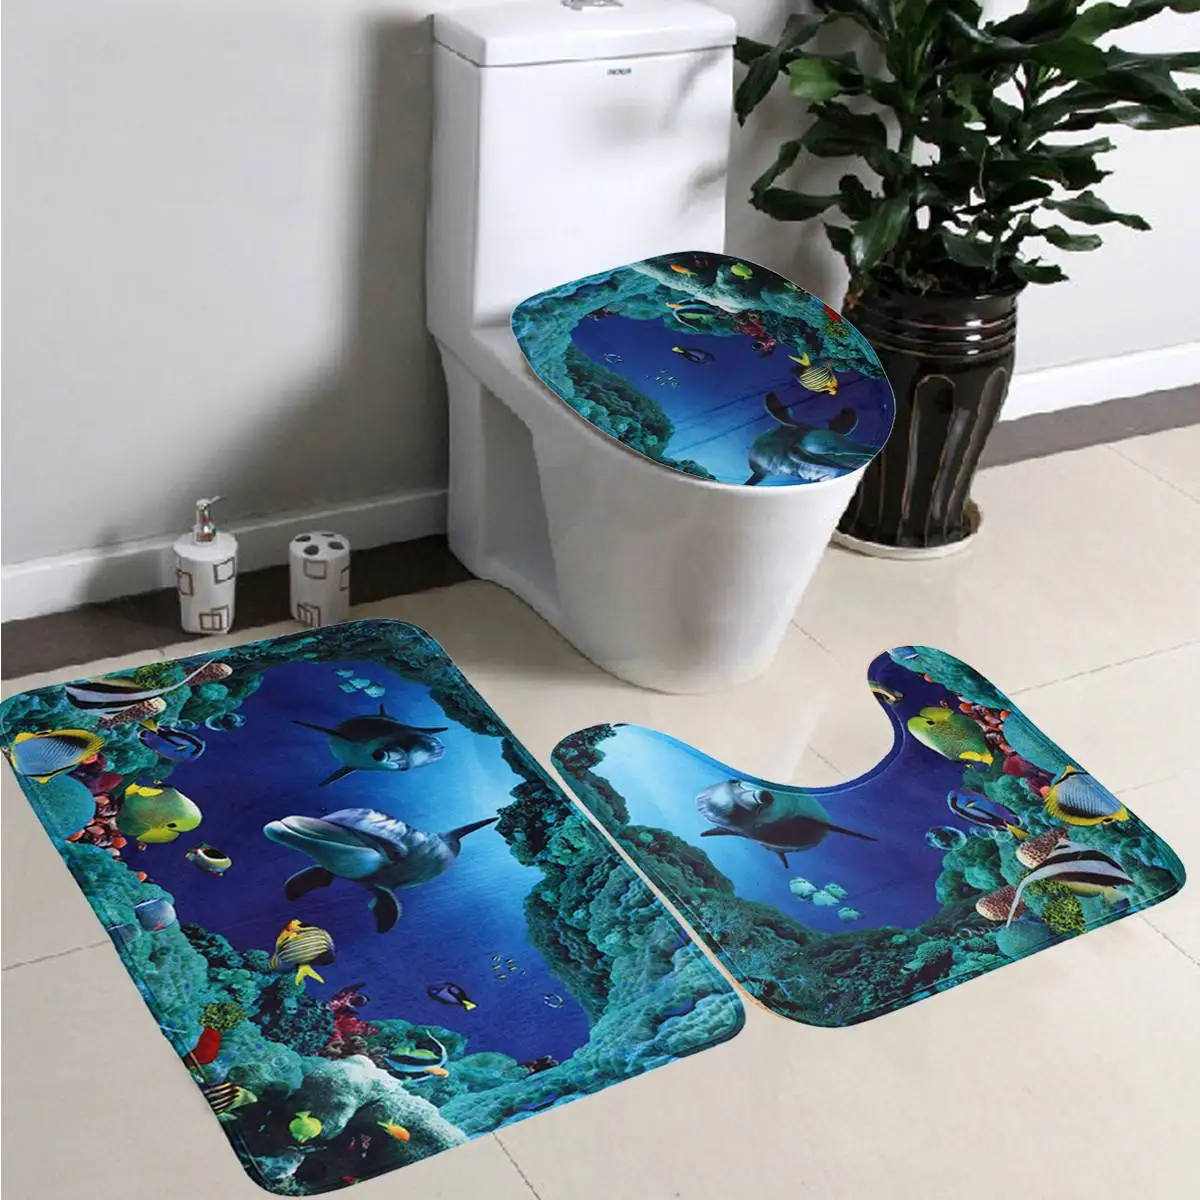 

3PCS Mat Bathroom Pedestal Rug Lid Toilet Cover Ocean Blue Sea Dolphin Waterproof Bathroom Non-Slip Rug Set Bath Decor